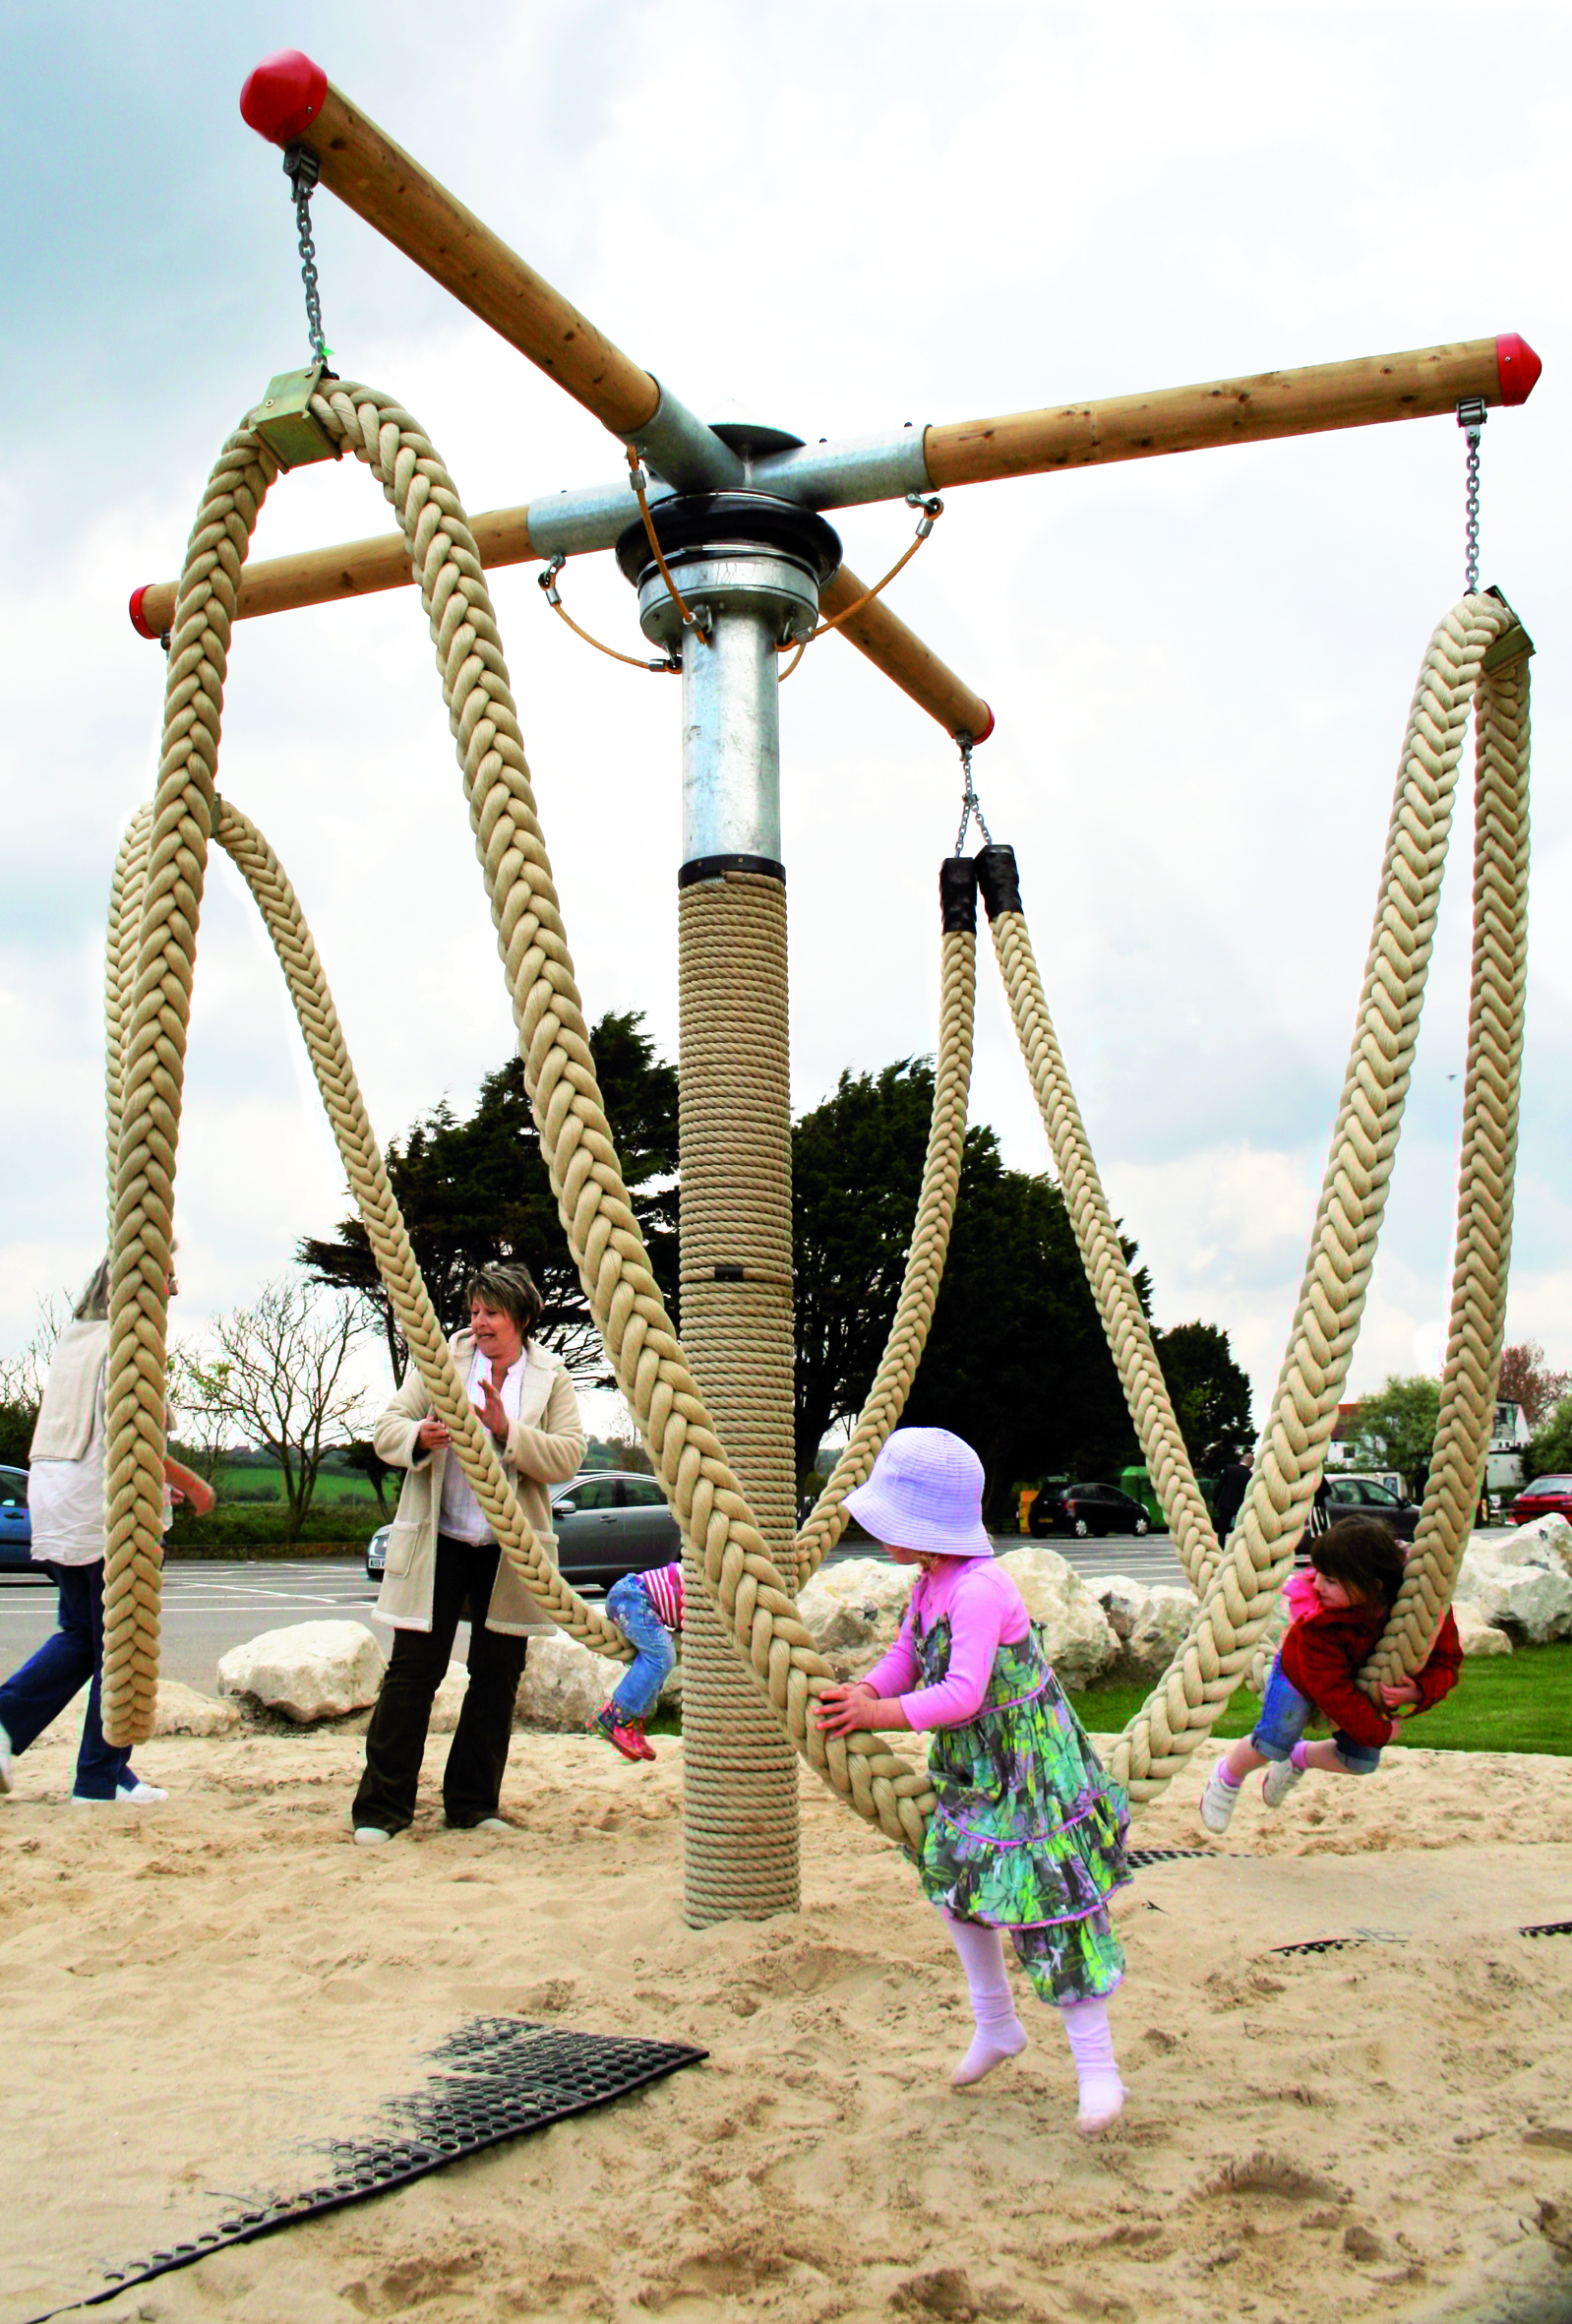 Turkuaz Park | Rotating Seesaw “Tarzan Swing”